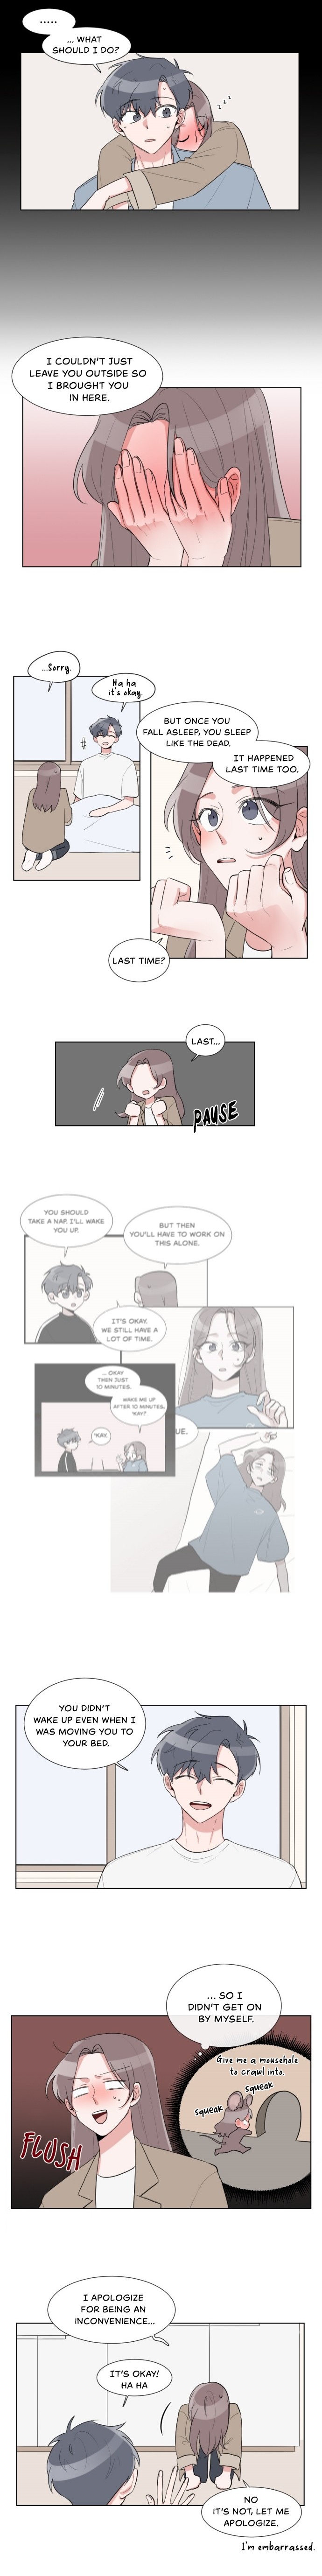 Gatabutata - Chapter 23 Page 5